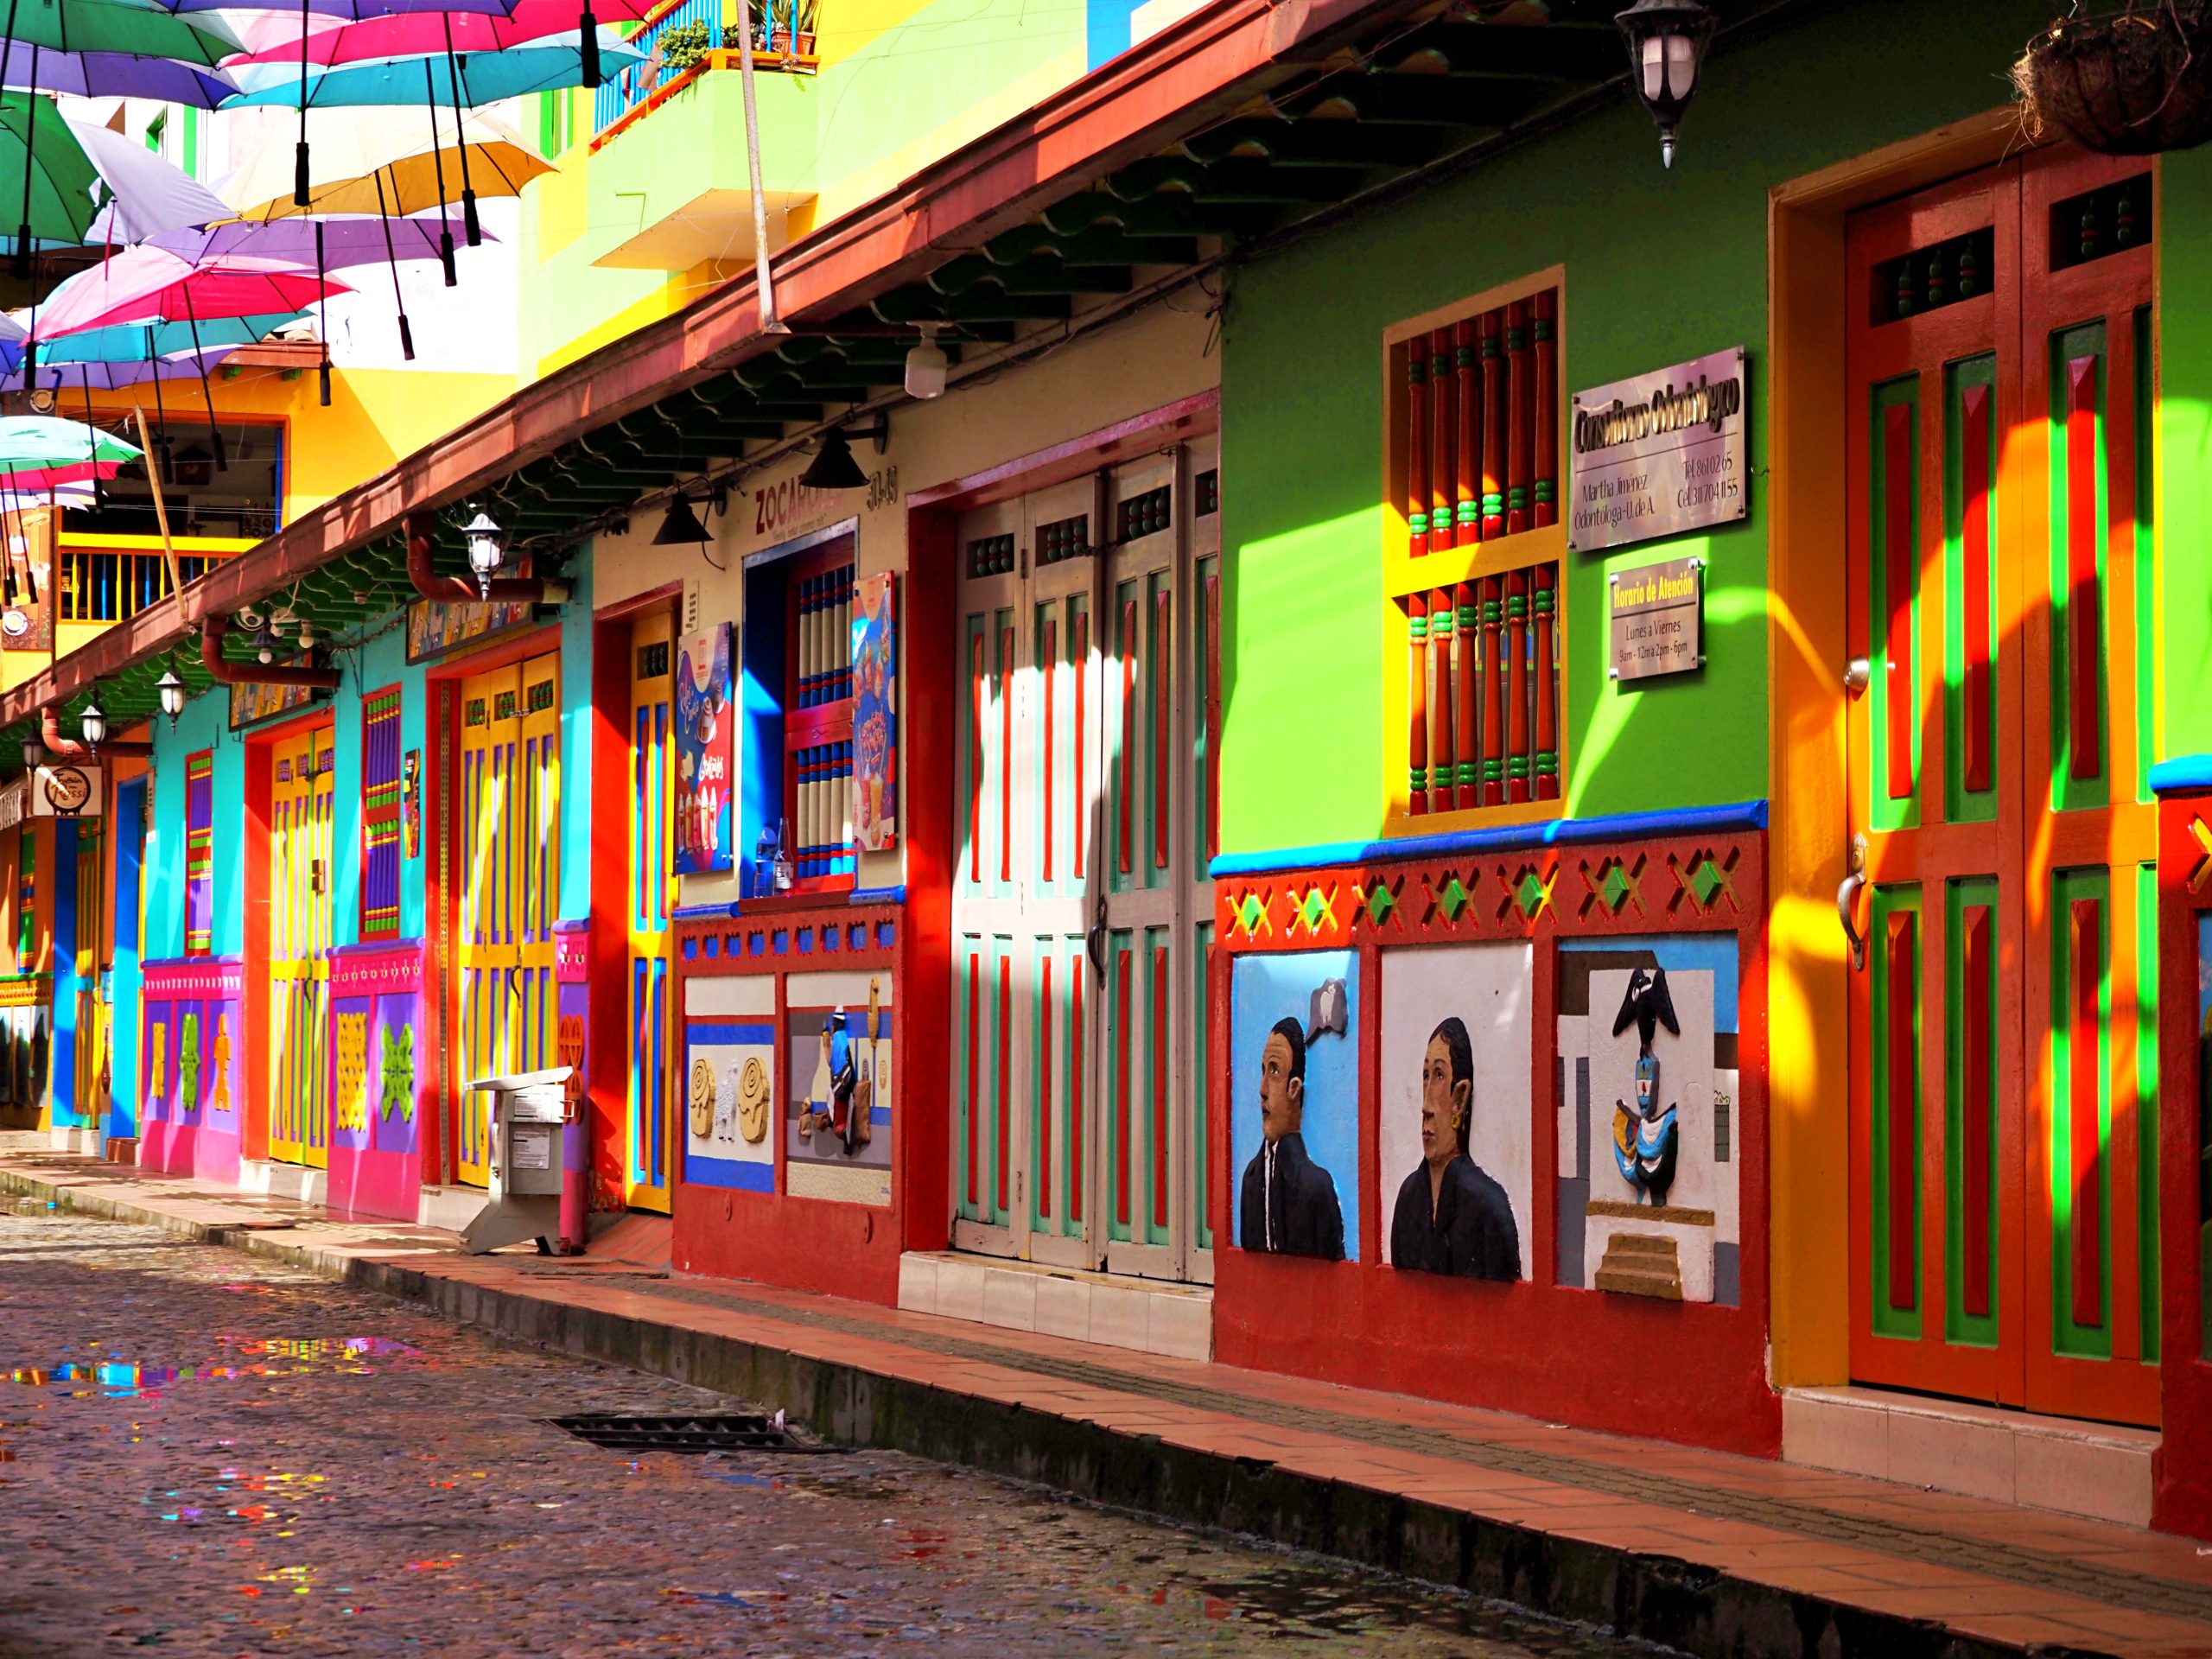 Bunte Reiseziele in Kolumbien - die Stadt Guatapè im Herzen des Landes